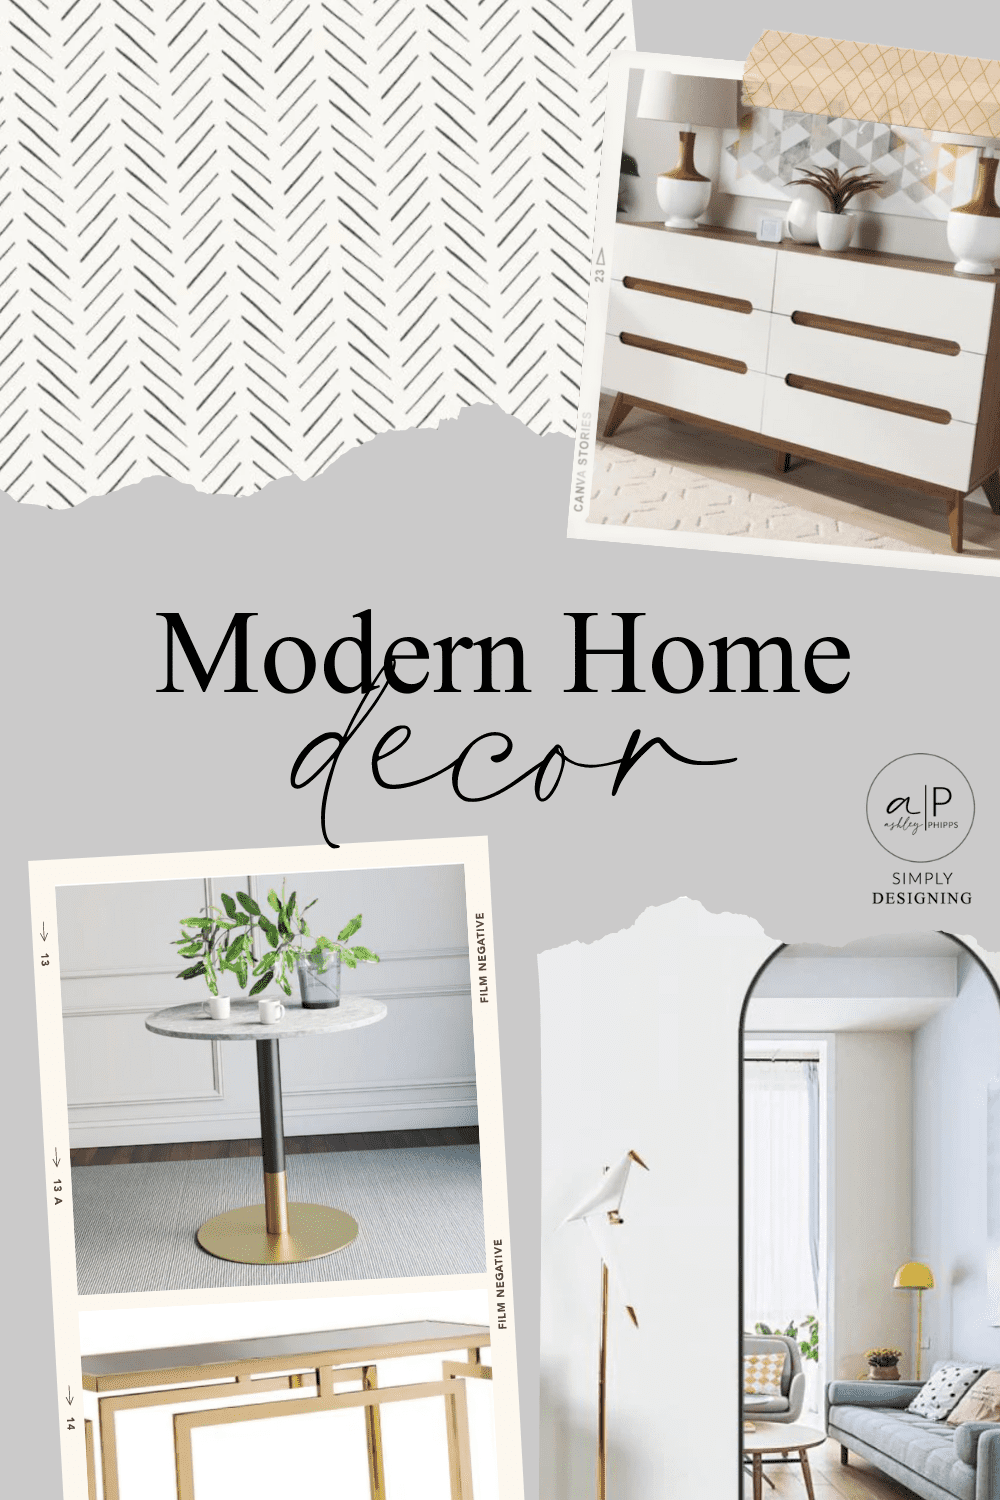 Modern Home Decor The Home Depot | 16 Budget-Friendly Modern Home Decor Ideas | 20 | Farmhouse Fall Centerpiece